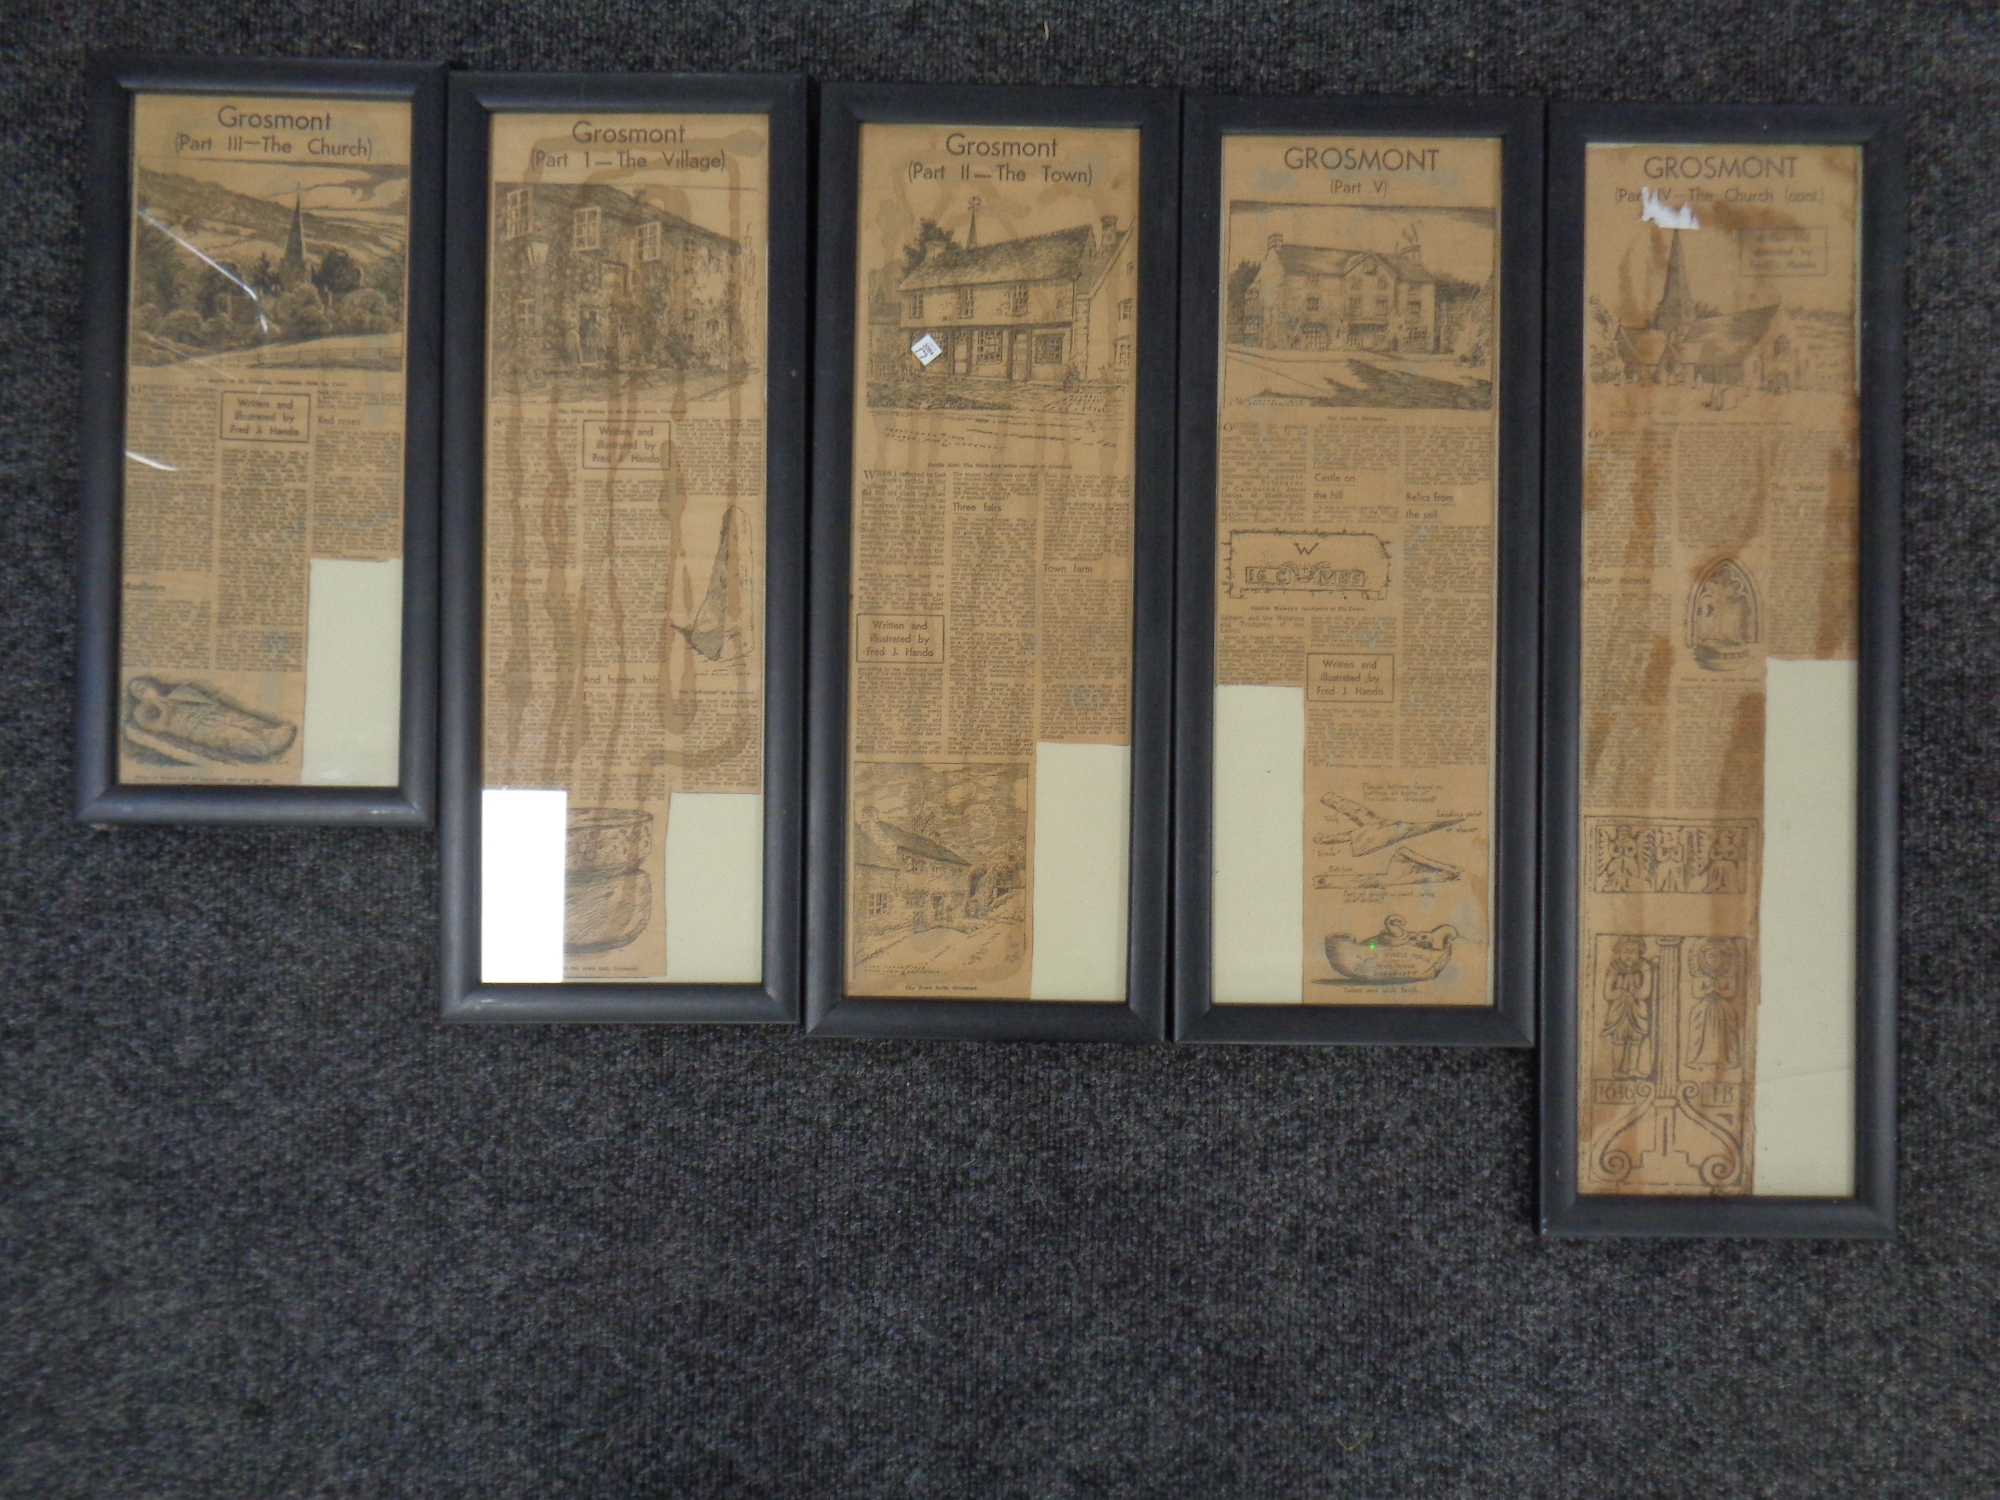 Five framed Victorian newspaper cuttings,